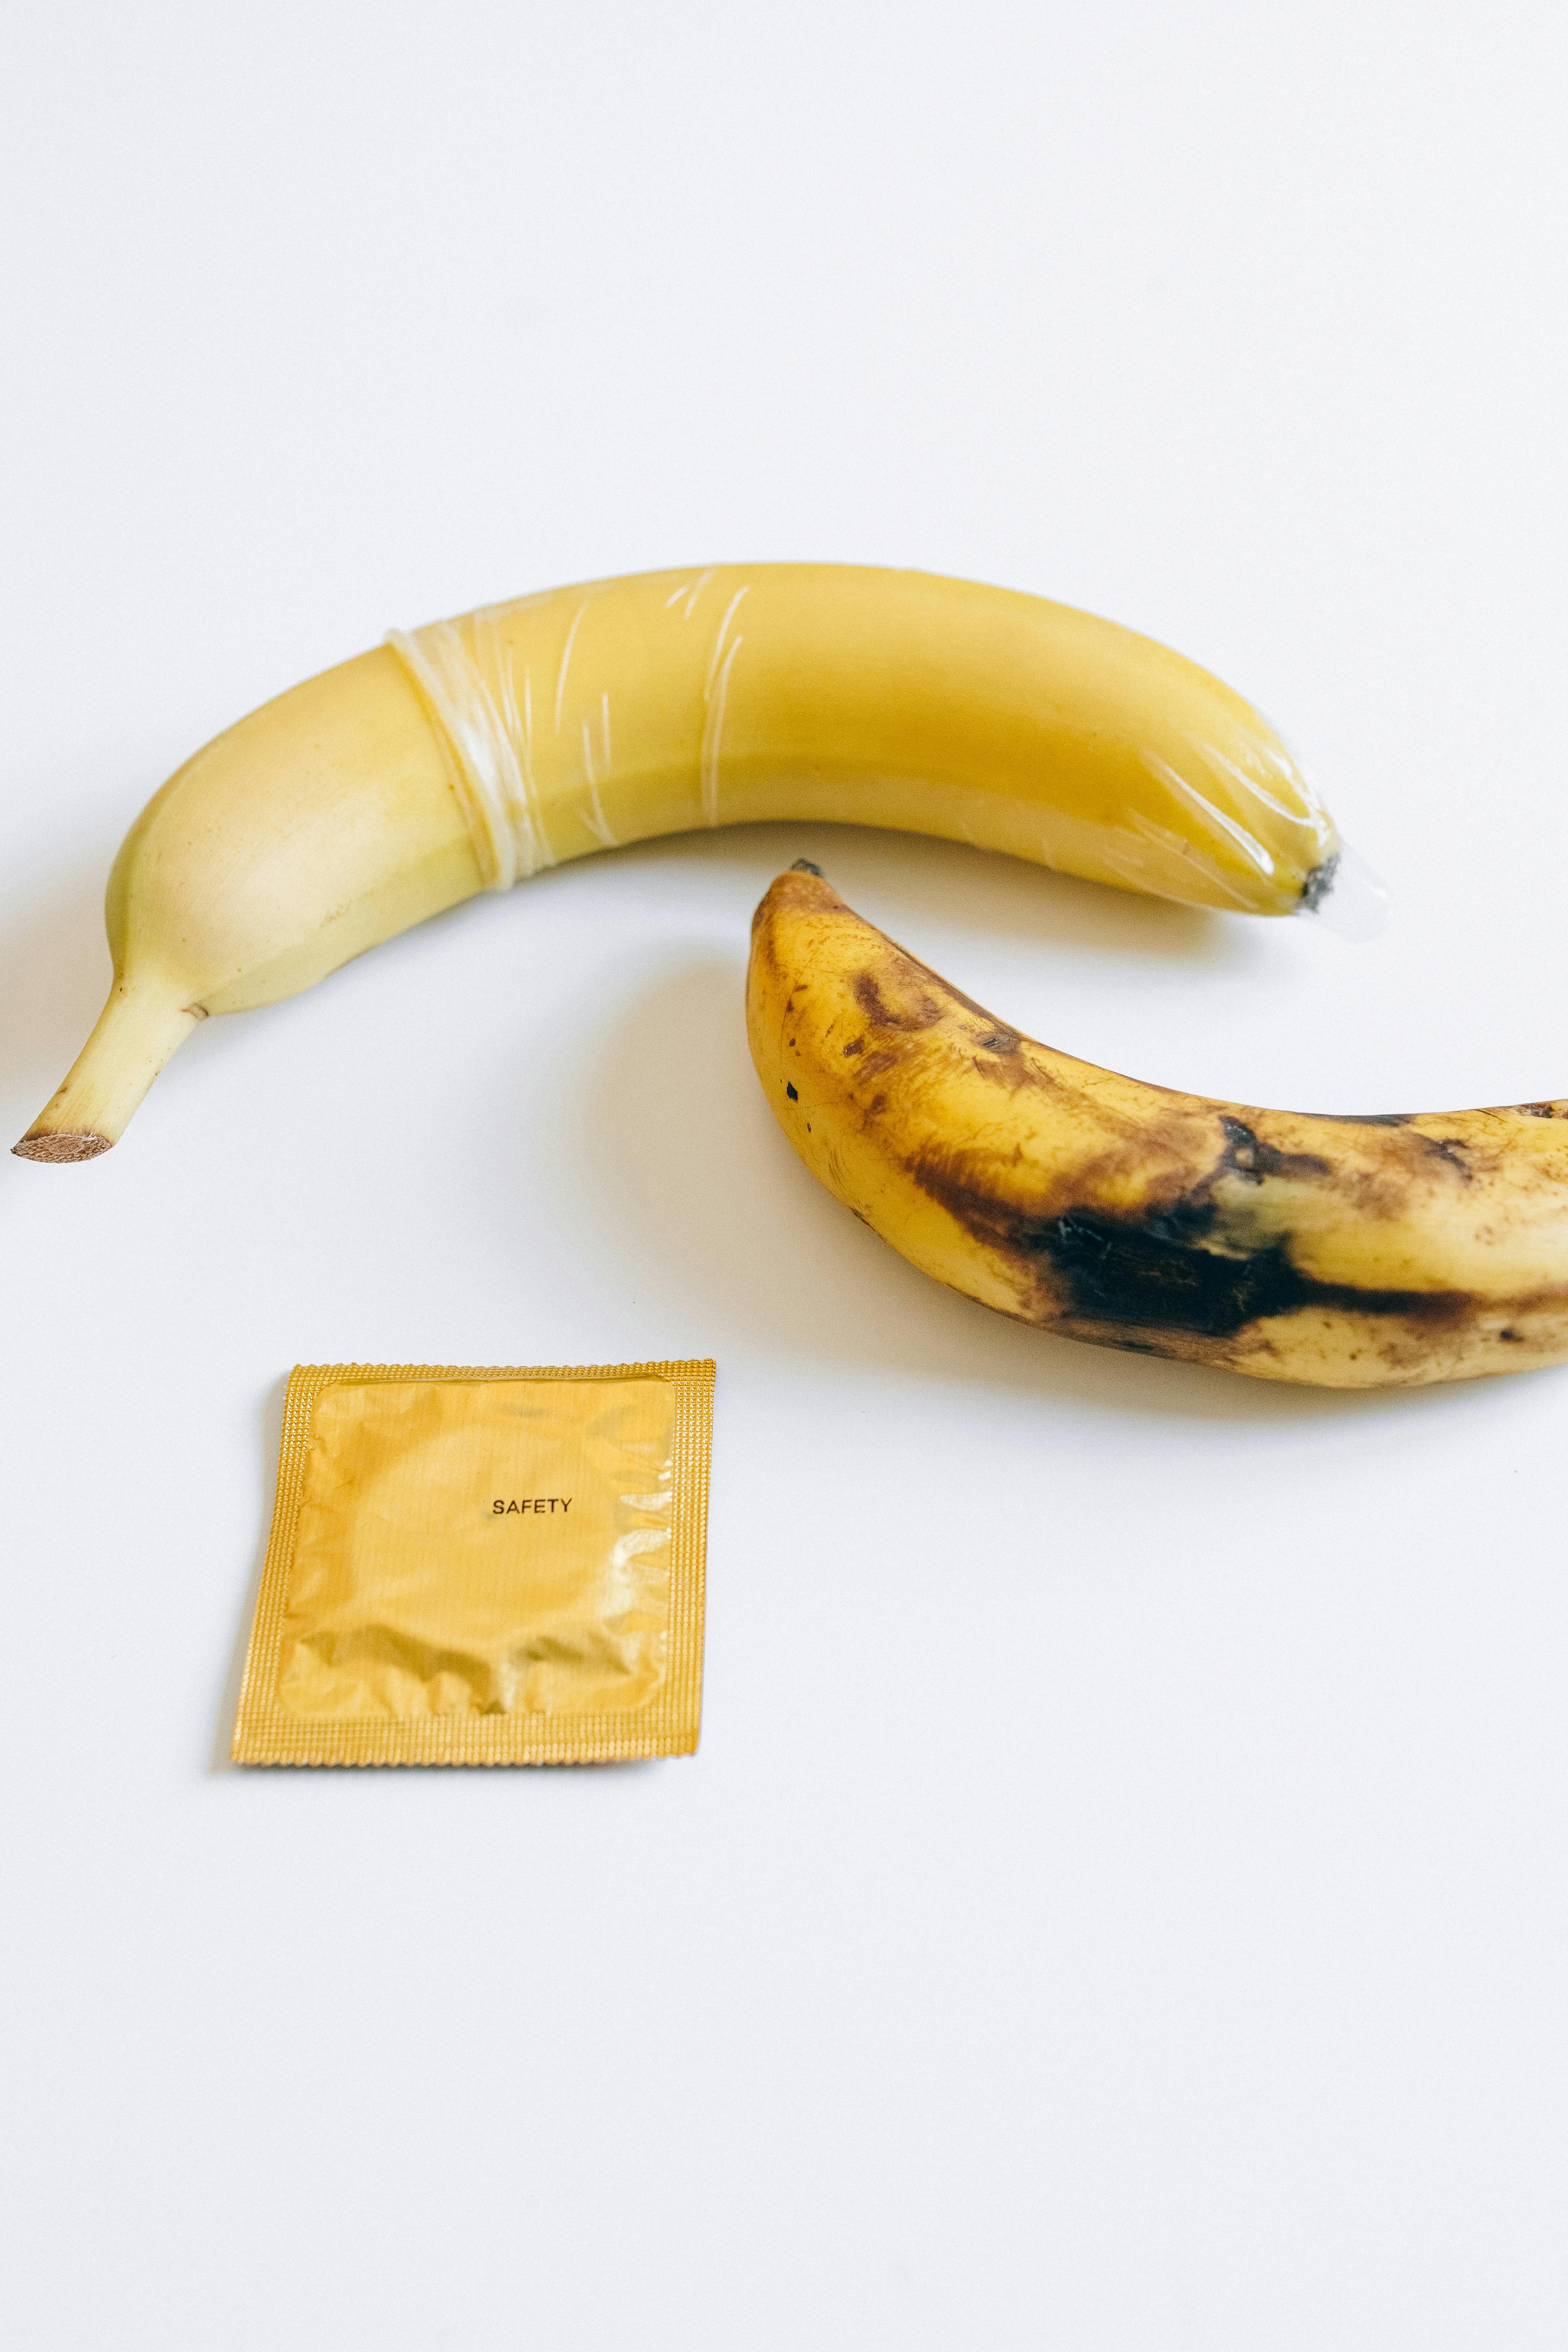 condom next to bananas